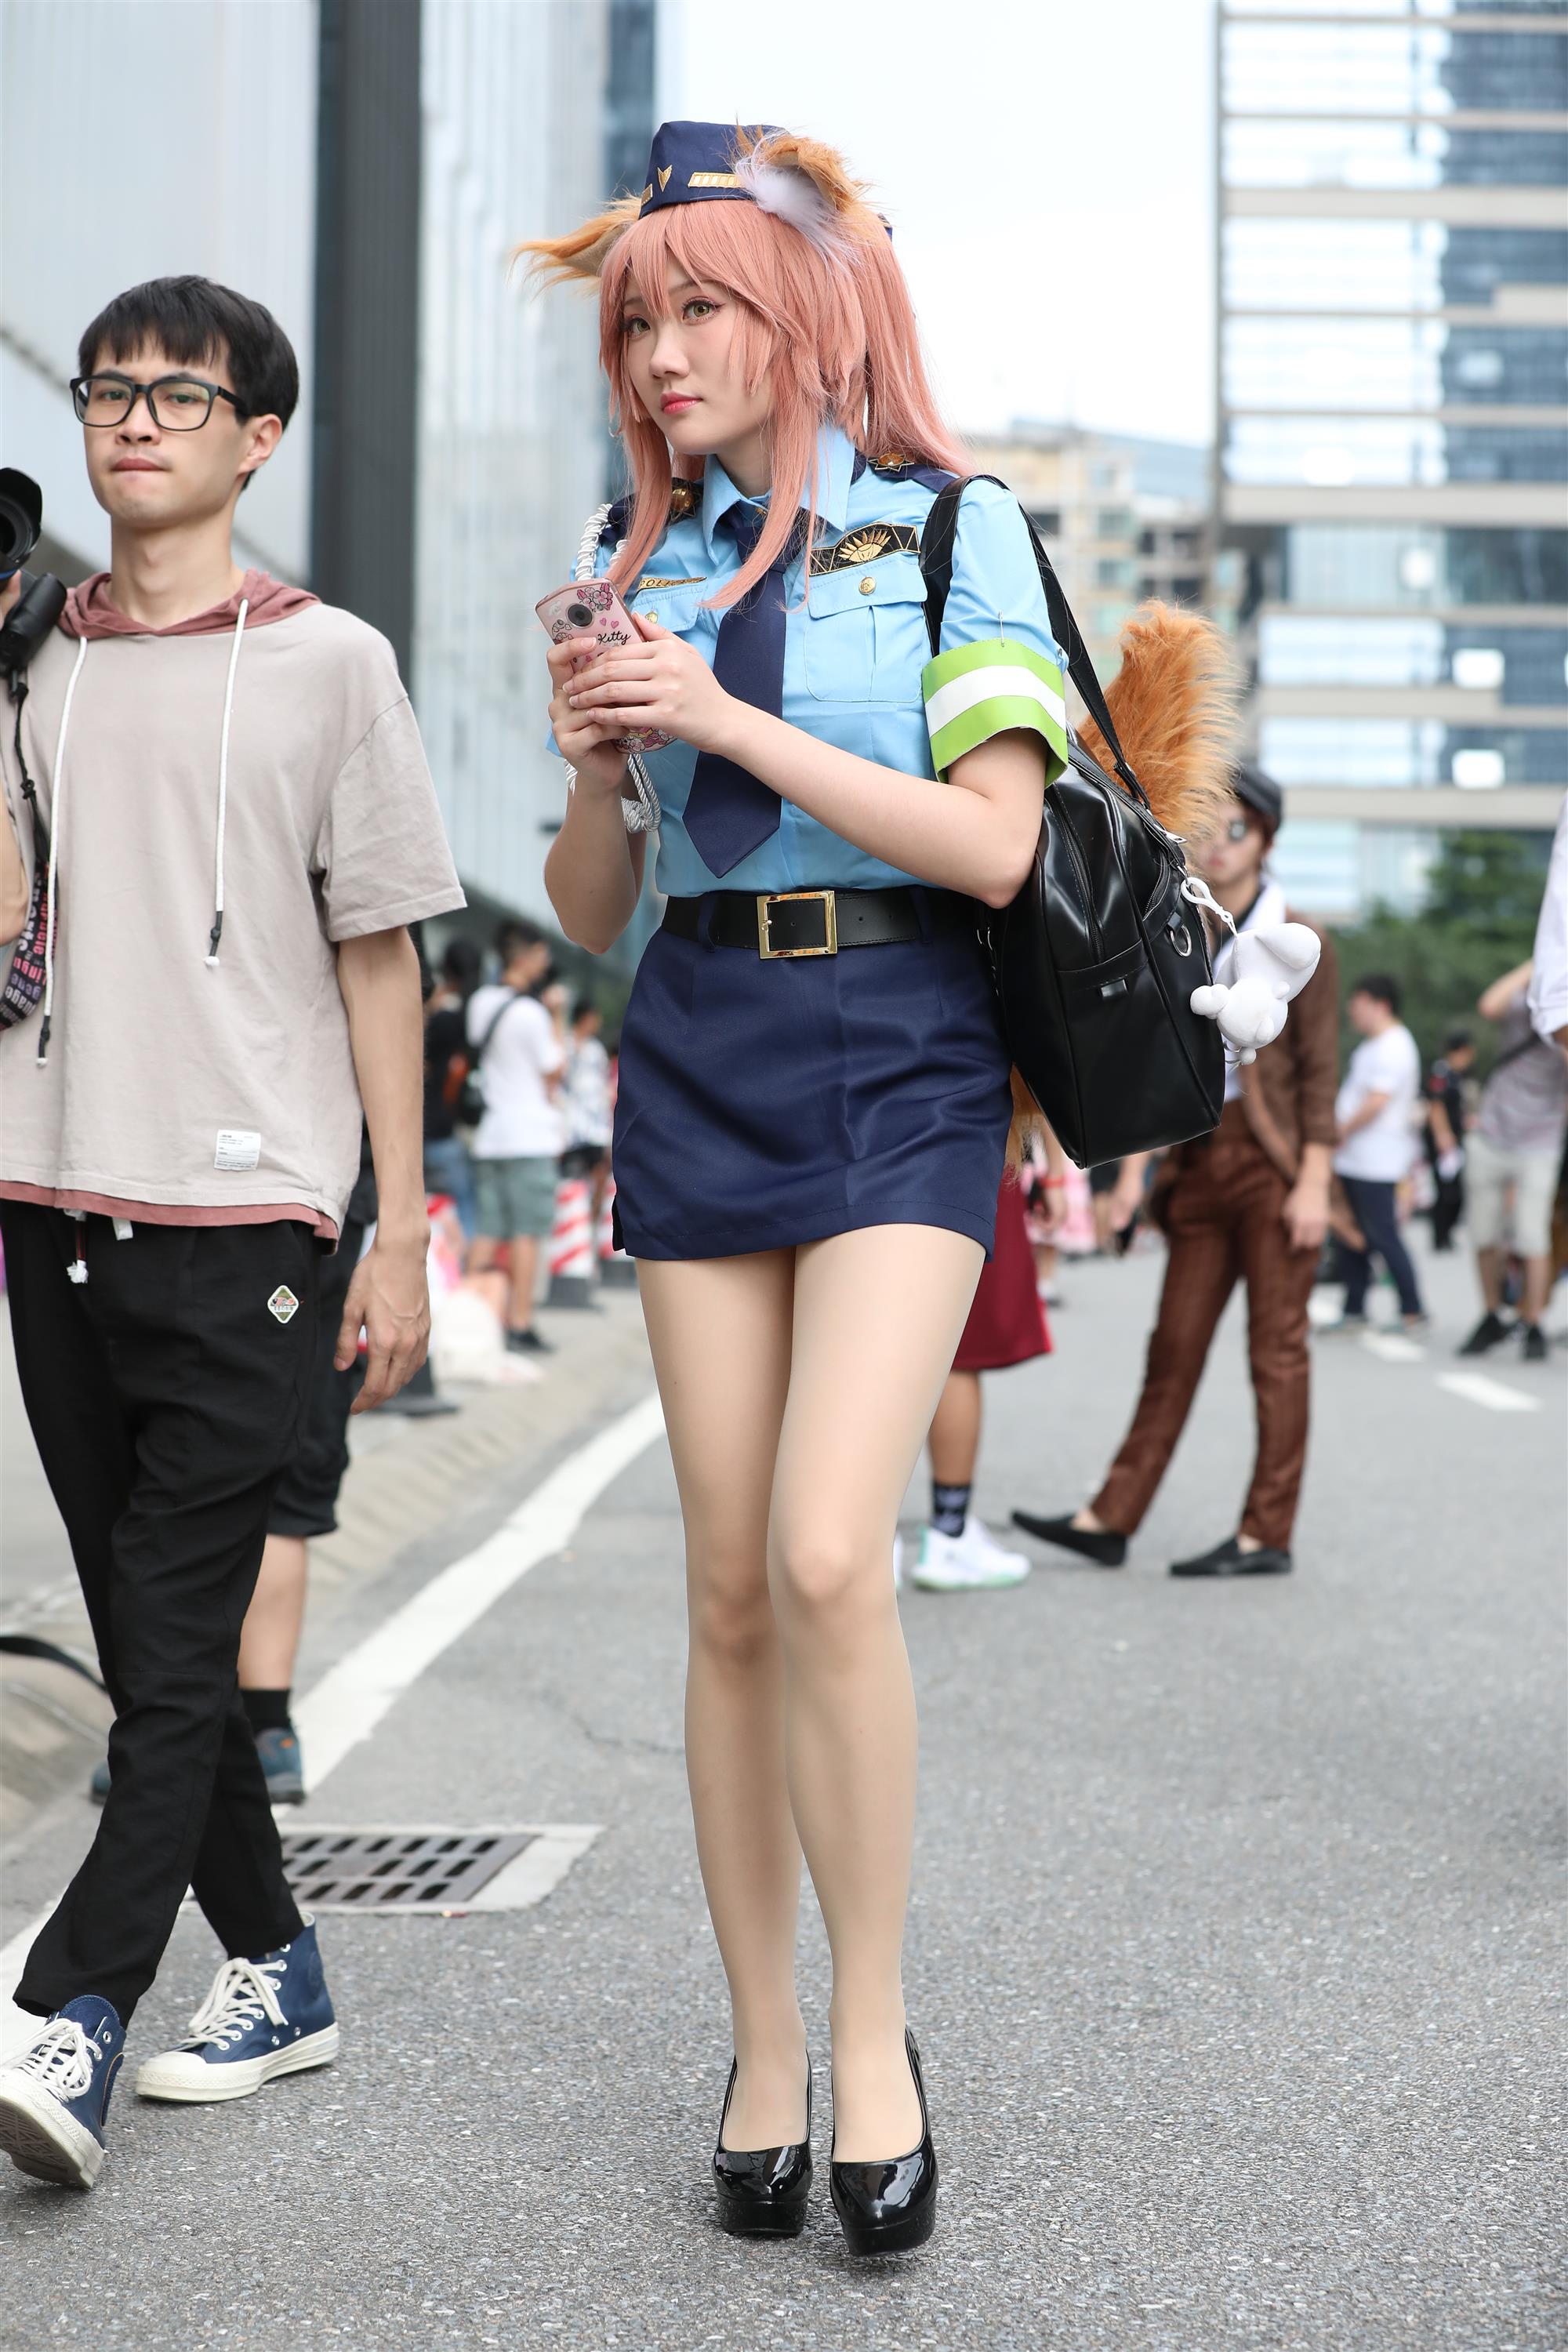 Street cosplay girl - 23.jpg